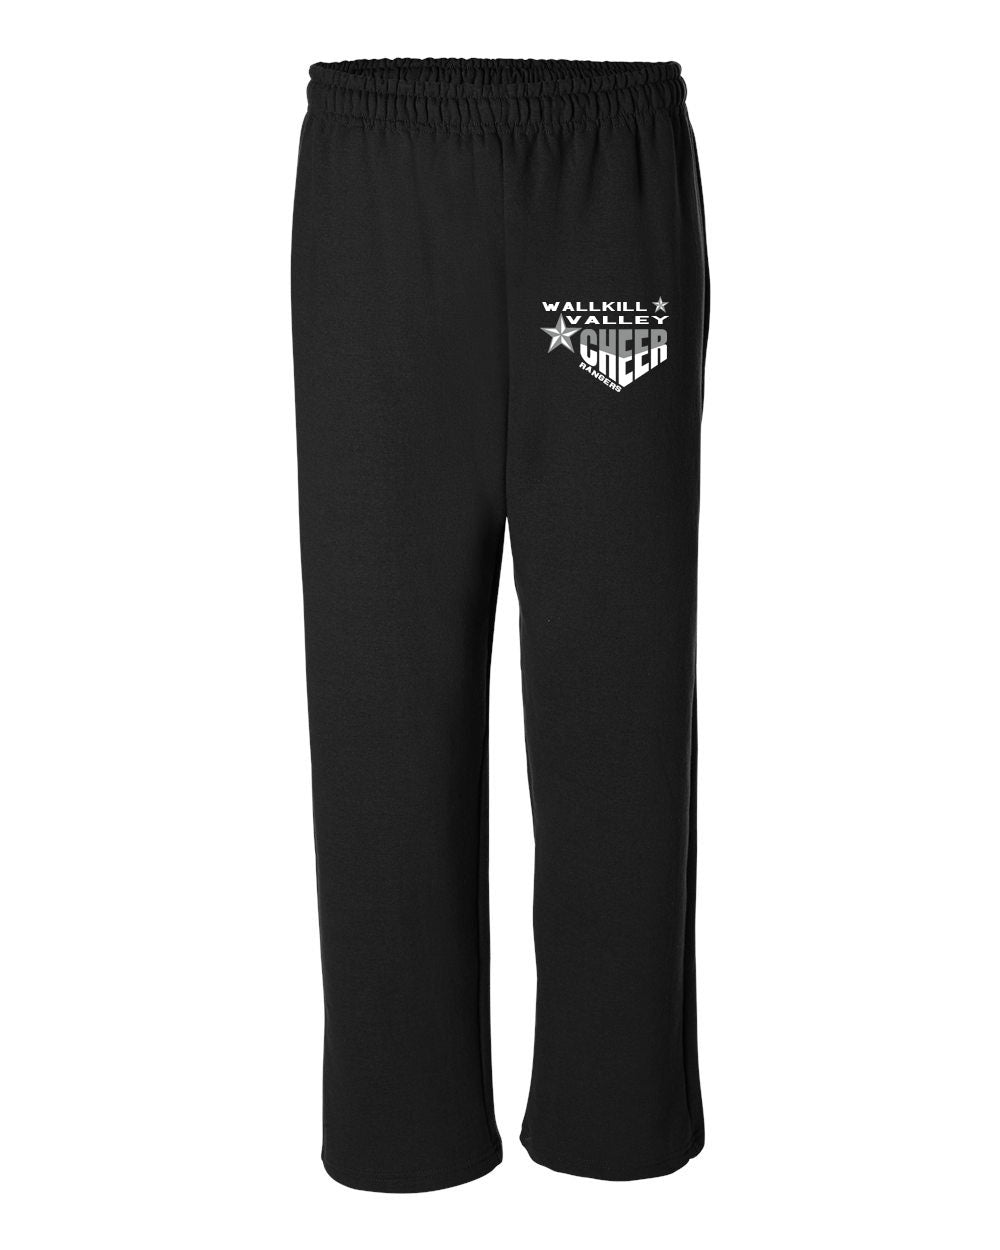 Wallkill Cheer Design 5 Open Bottom Sweatpants